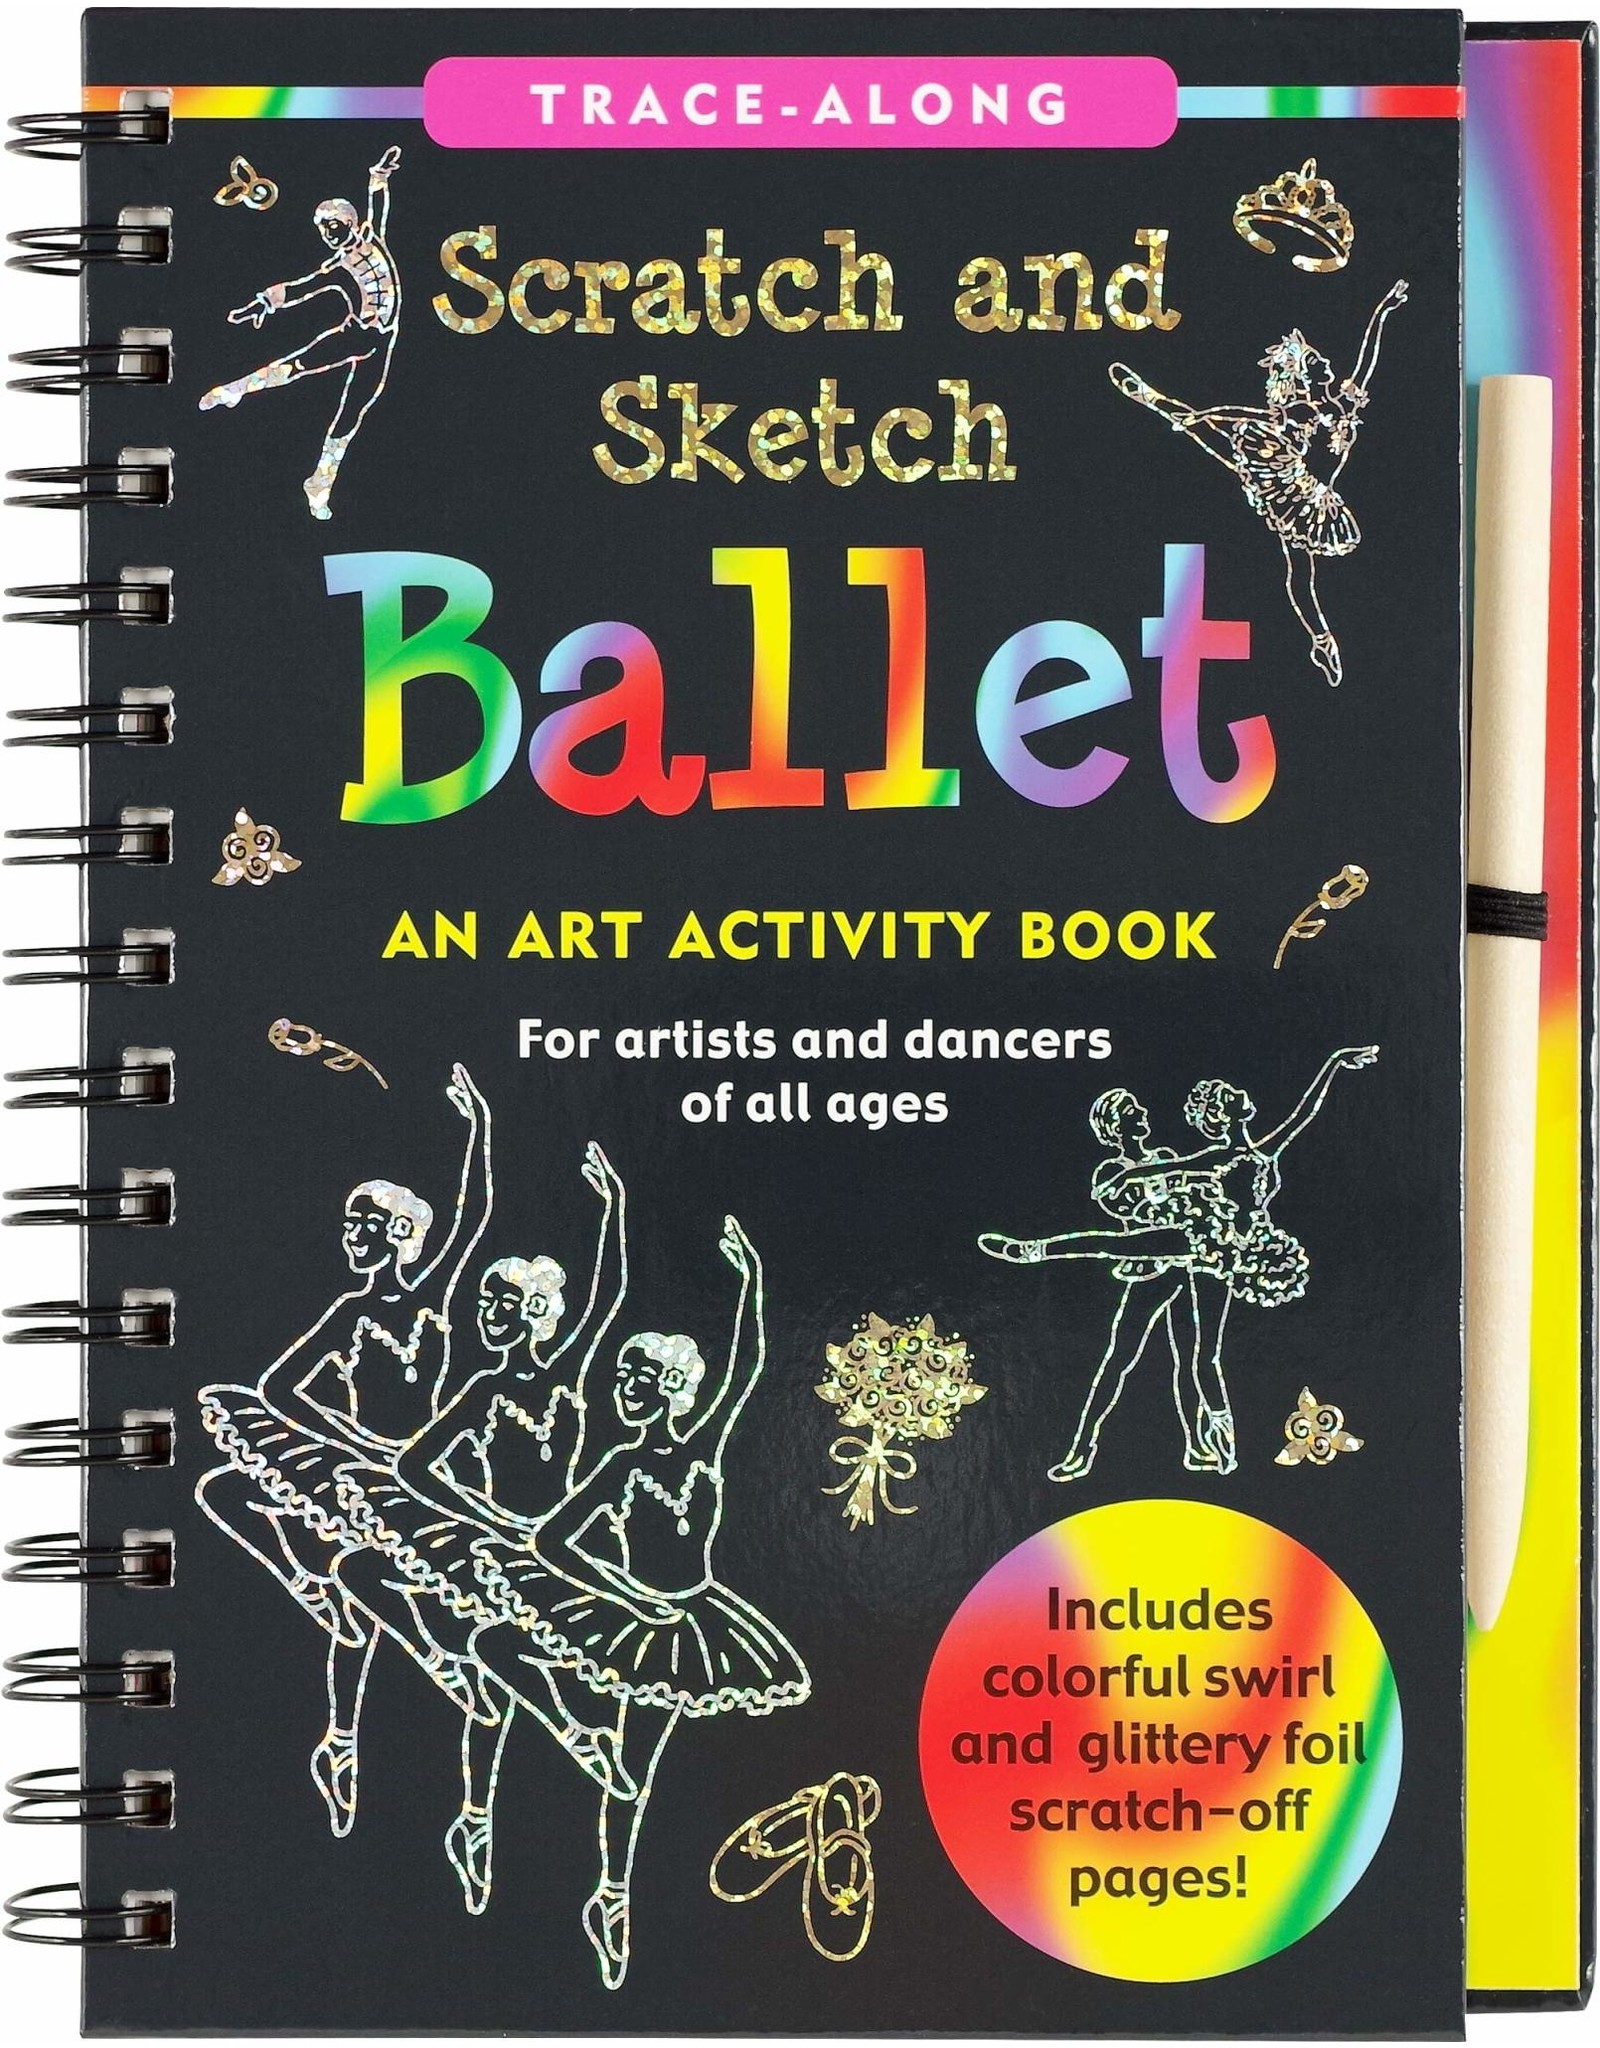 Scratch and Sketch Ballet